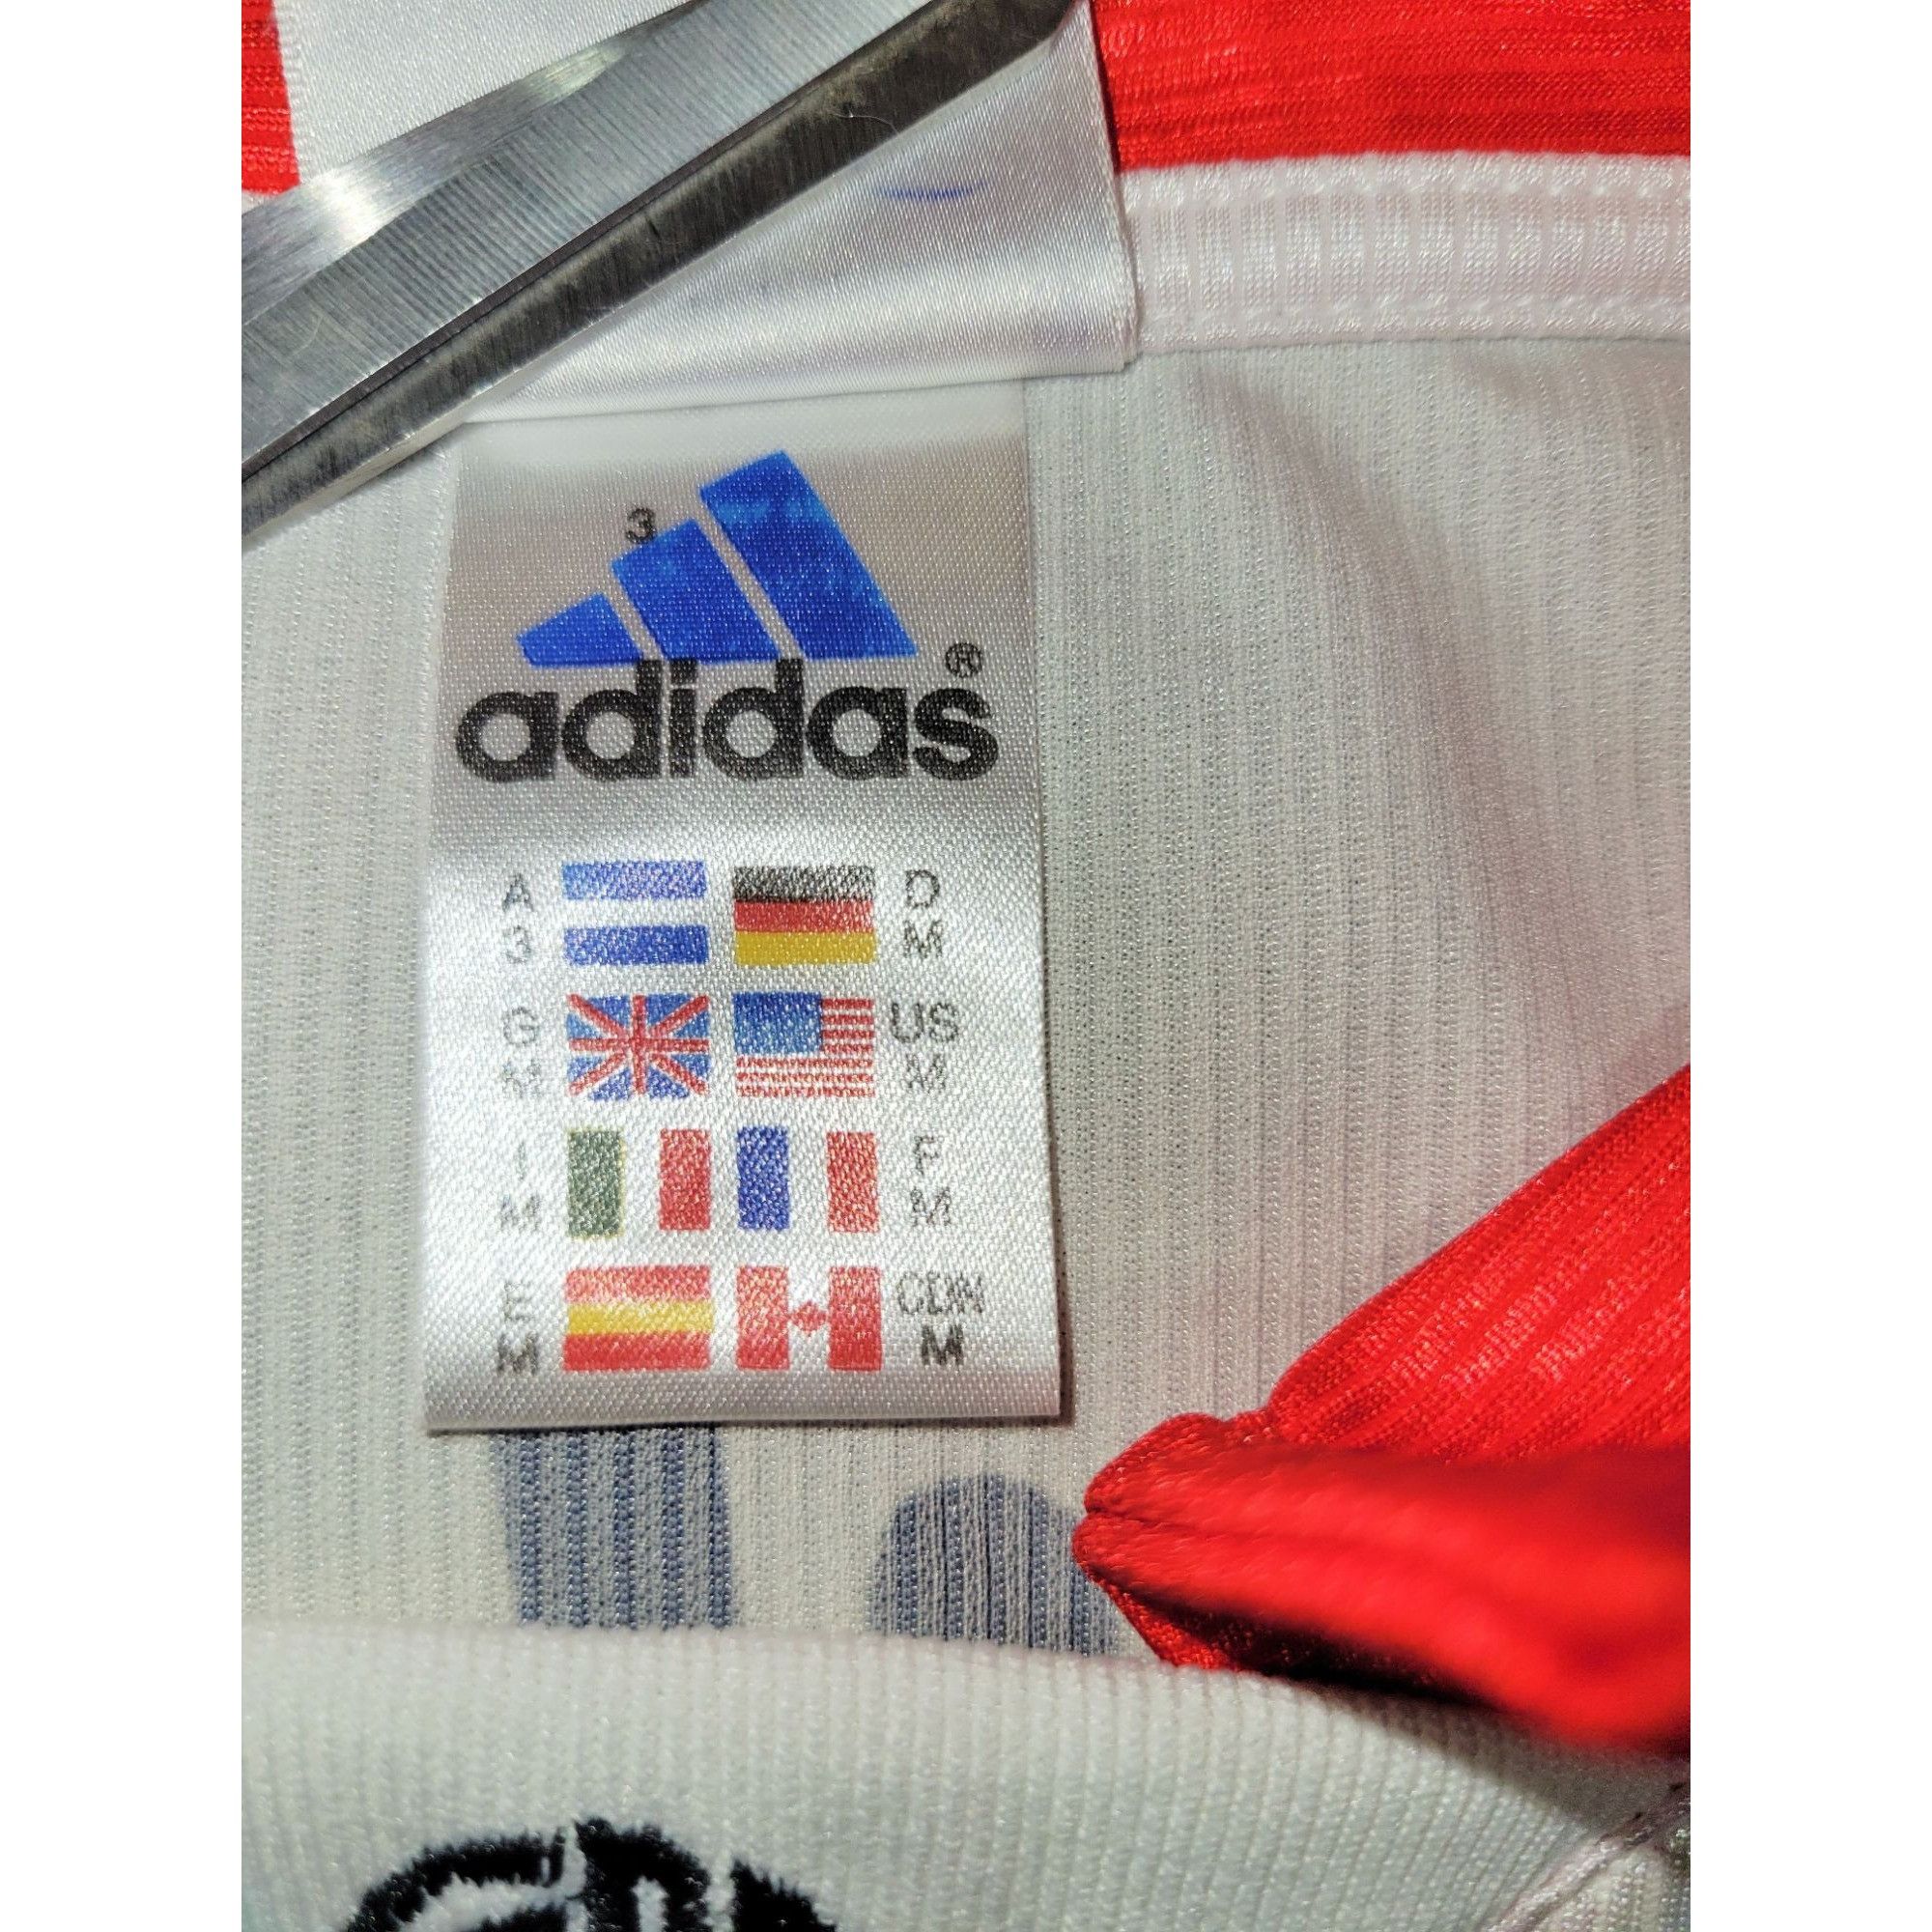 Adidas River Plate Adidas 1998 1999 2000 LTD EDITION Soccer Jersey Size US M / EU 48-50 / 2 - 6 Thumbnail